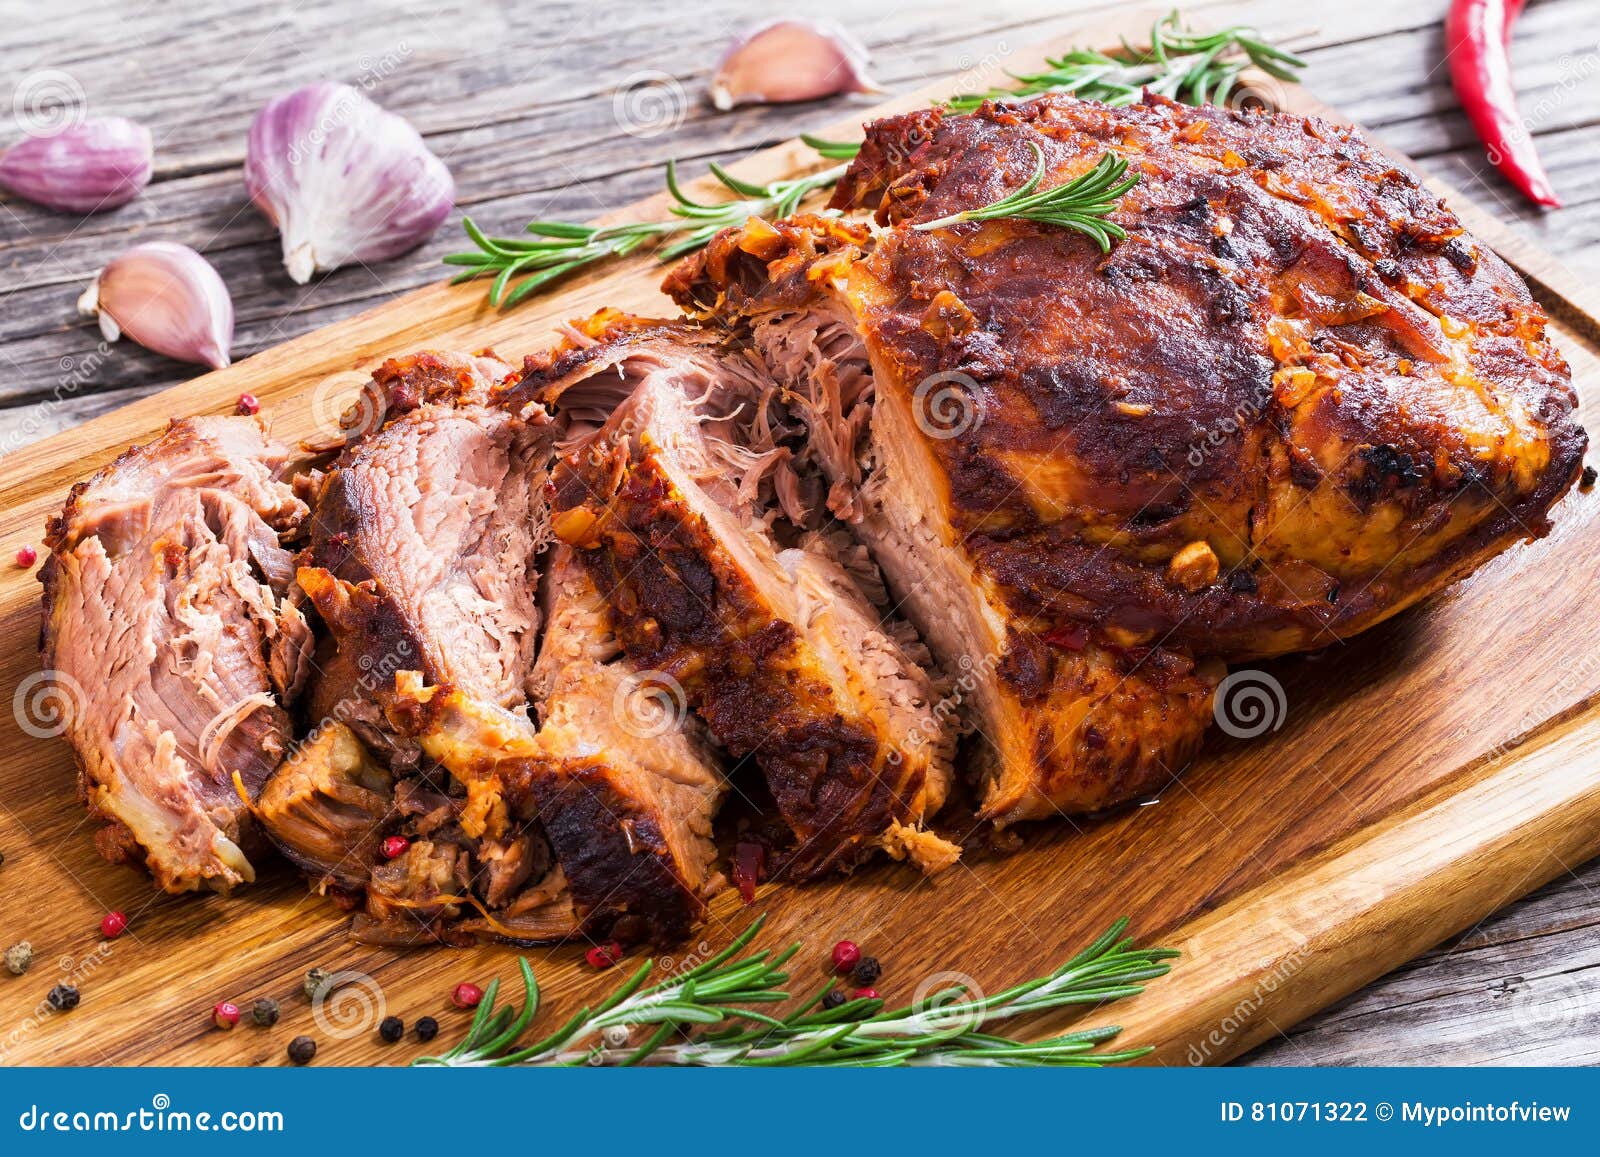 big piece of slow cooked oven-barbecued pulled pork shoulder